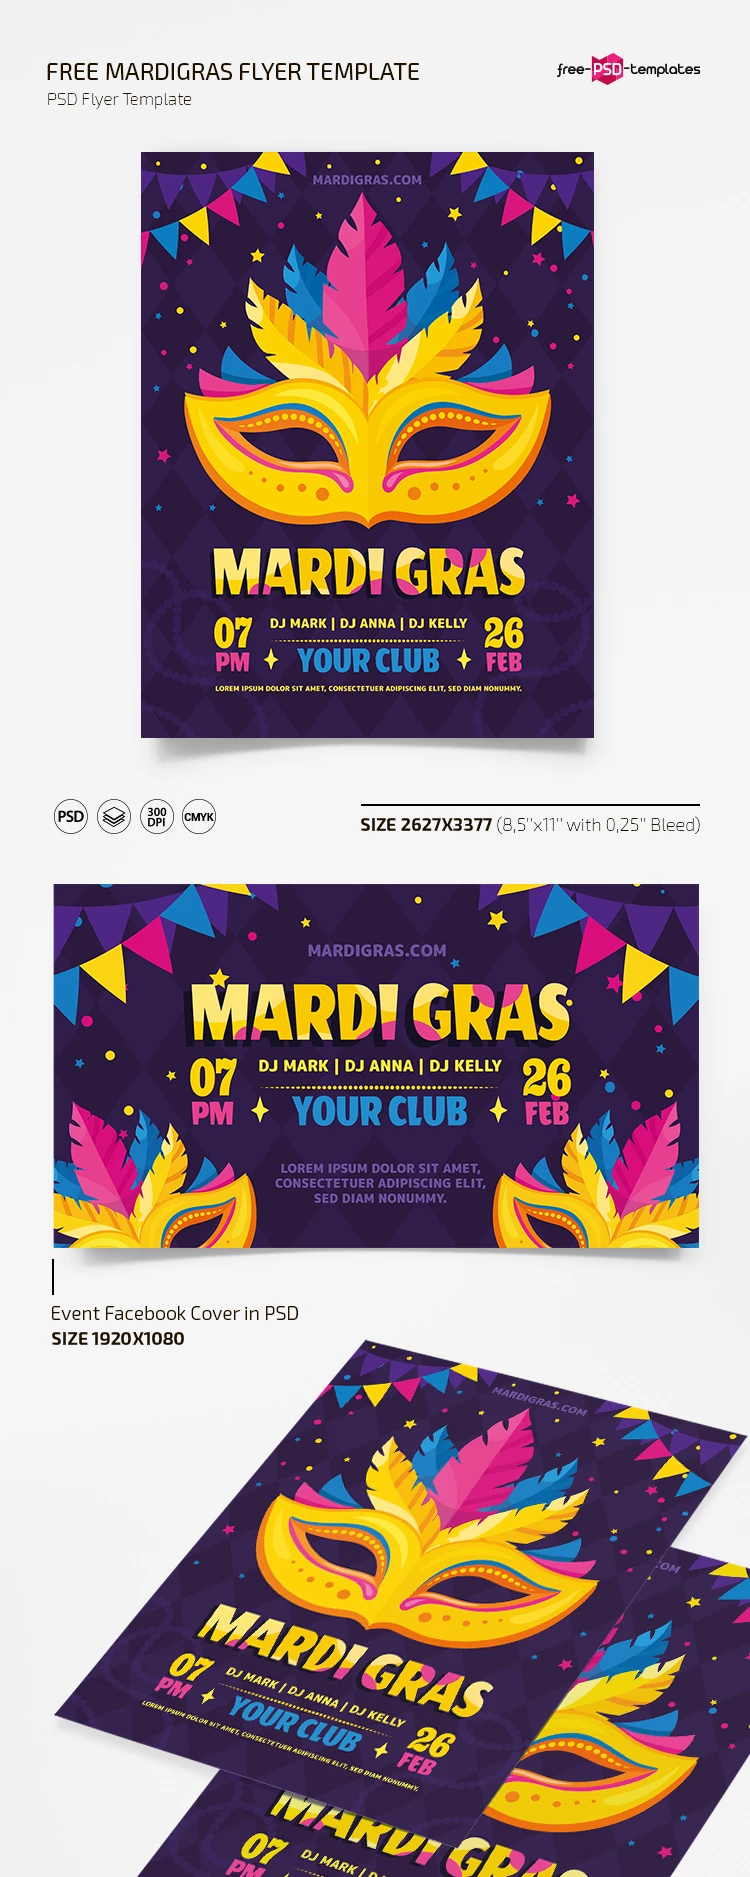 Free Mardi Gras Party Flyer